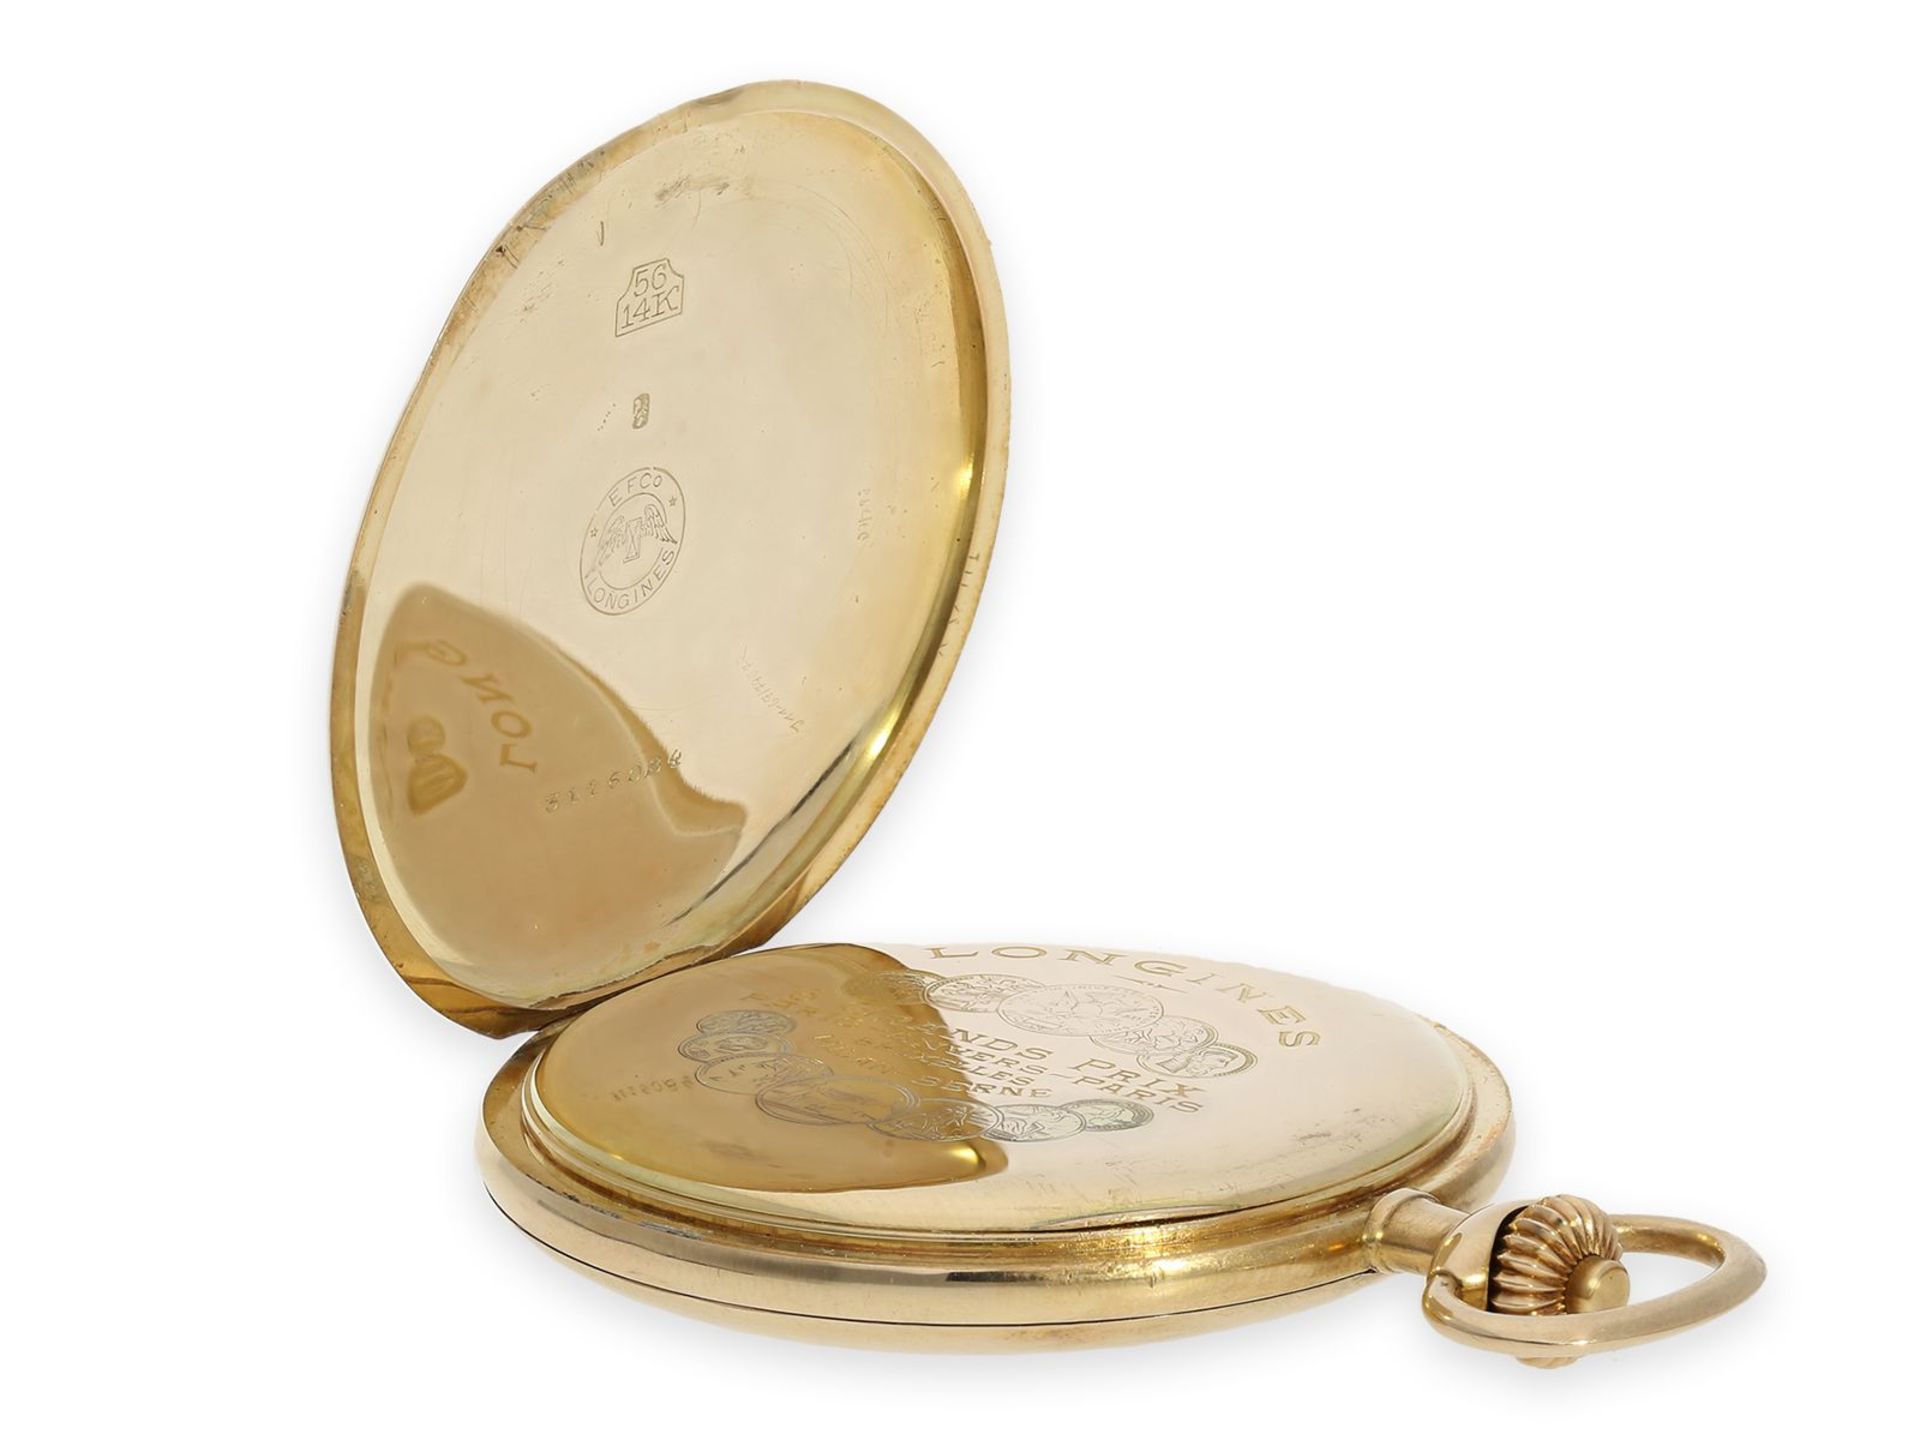 Taschenuhr: qualitätsvolle Goldsavonnette der Marke Longines, Ankerchronometer Kaliber 19.80, ca. - Image 5 of 7